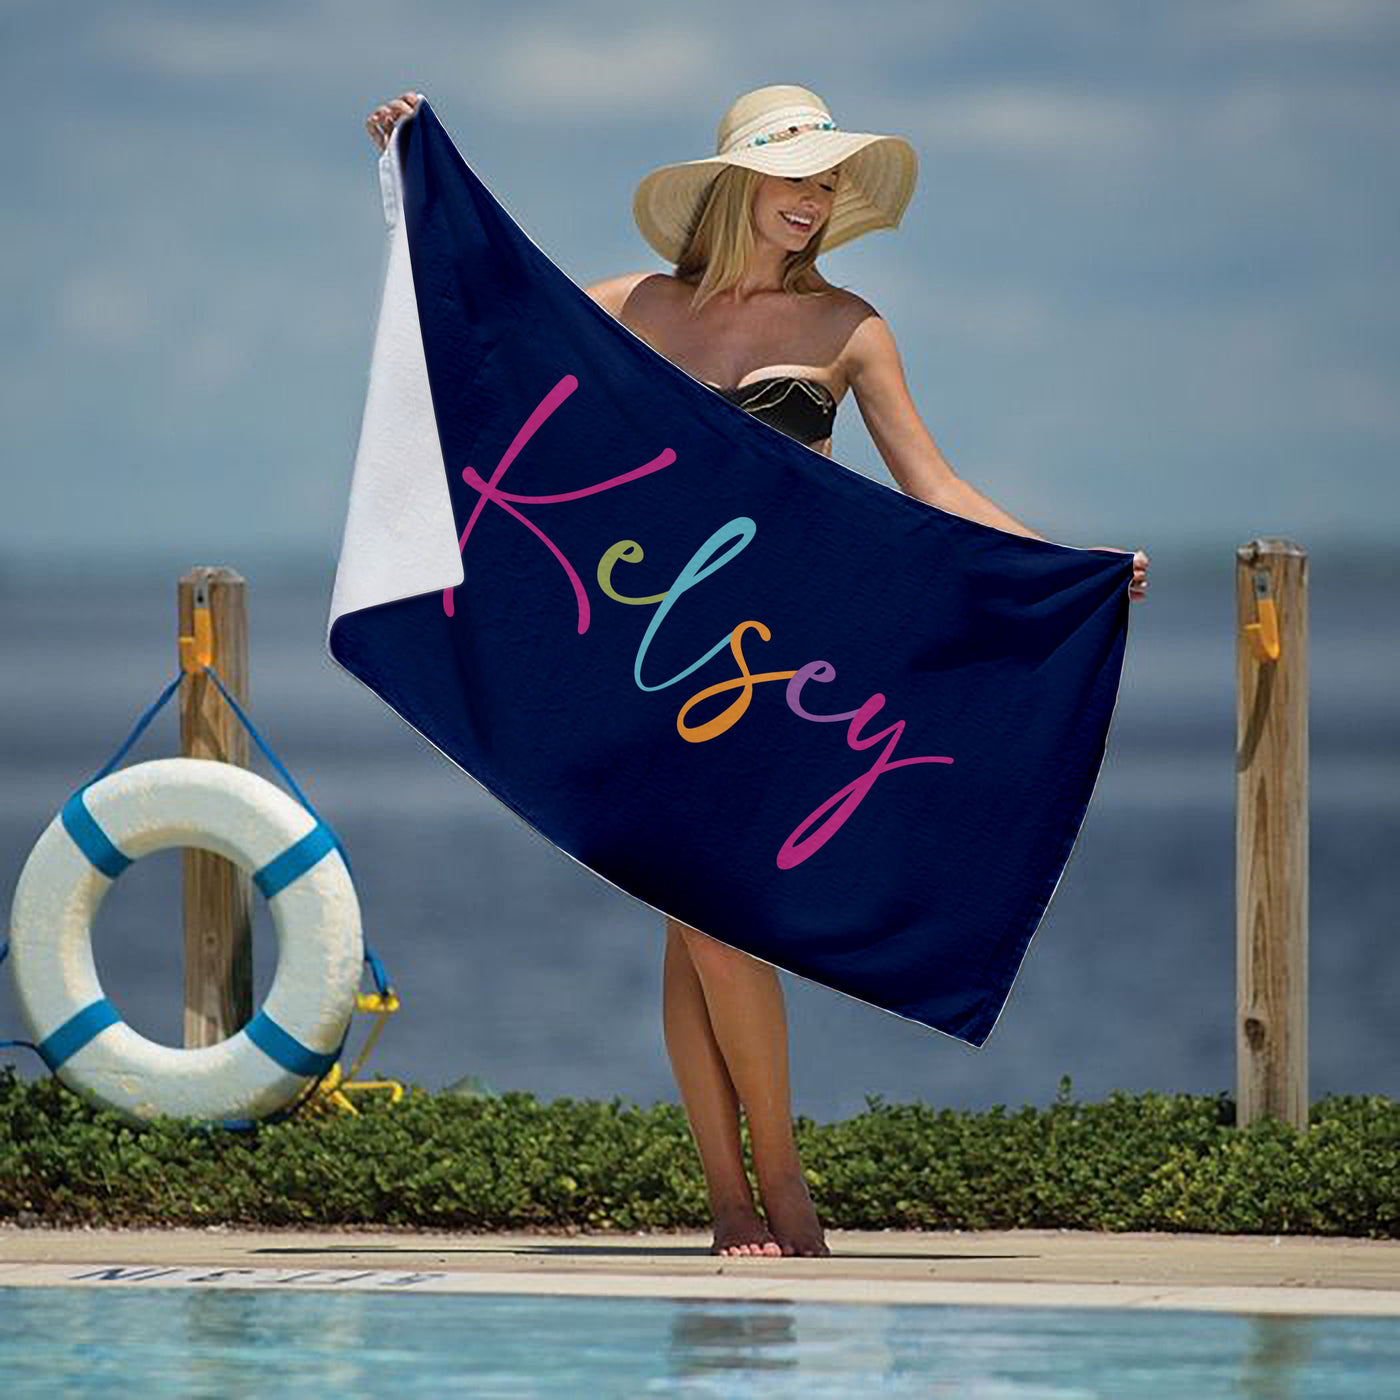 Colorful Custom Name Beach Towel